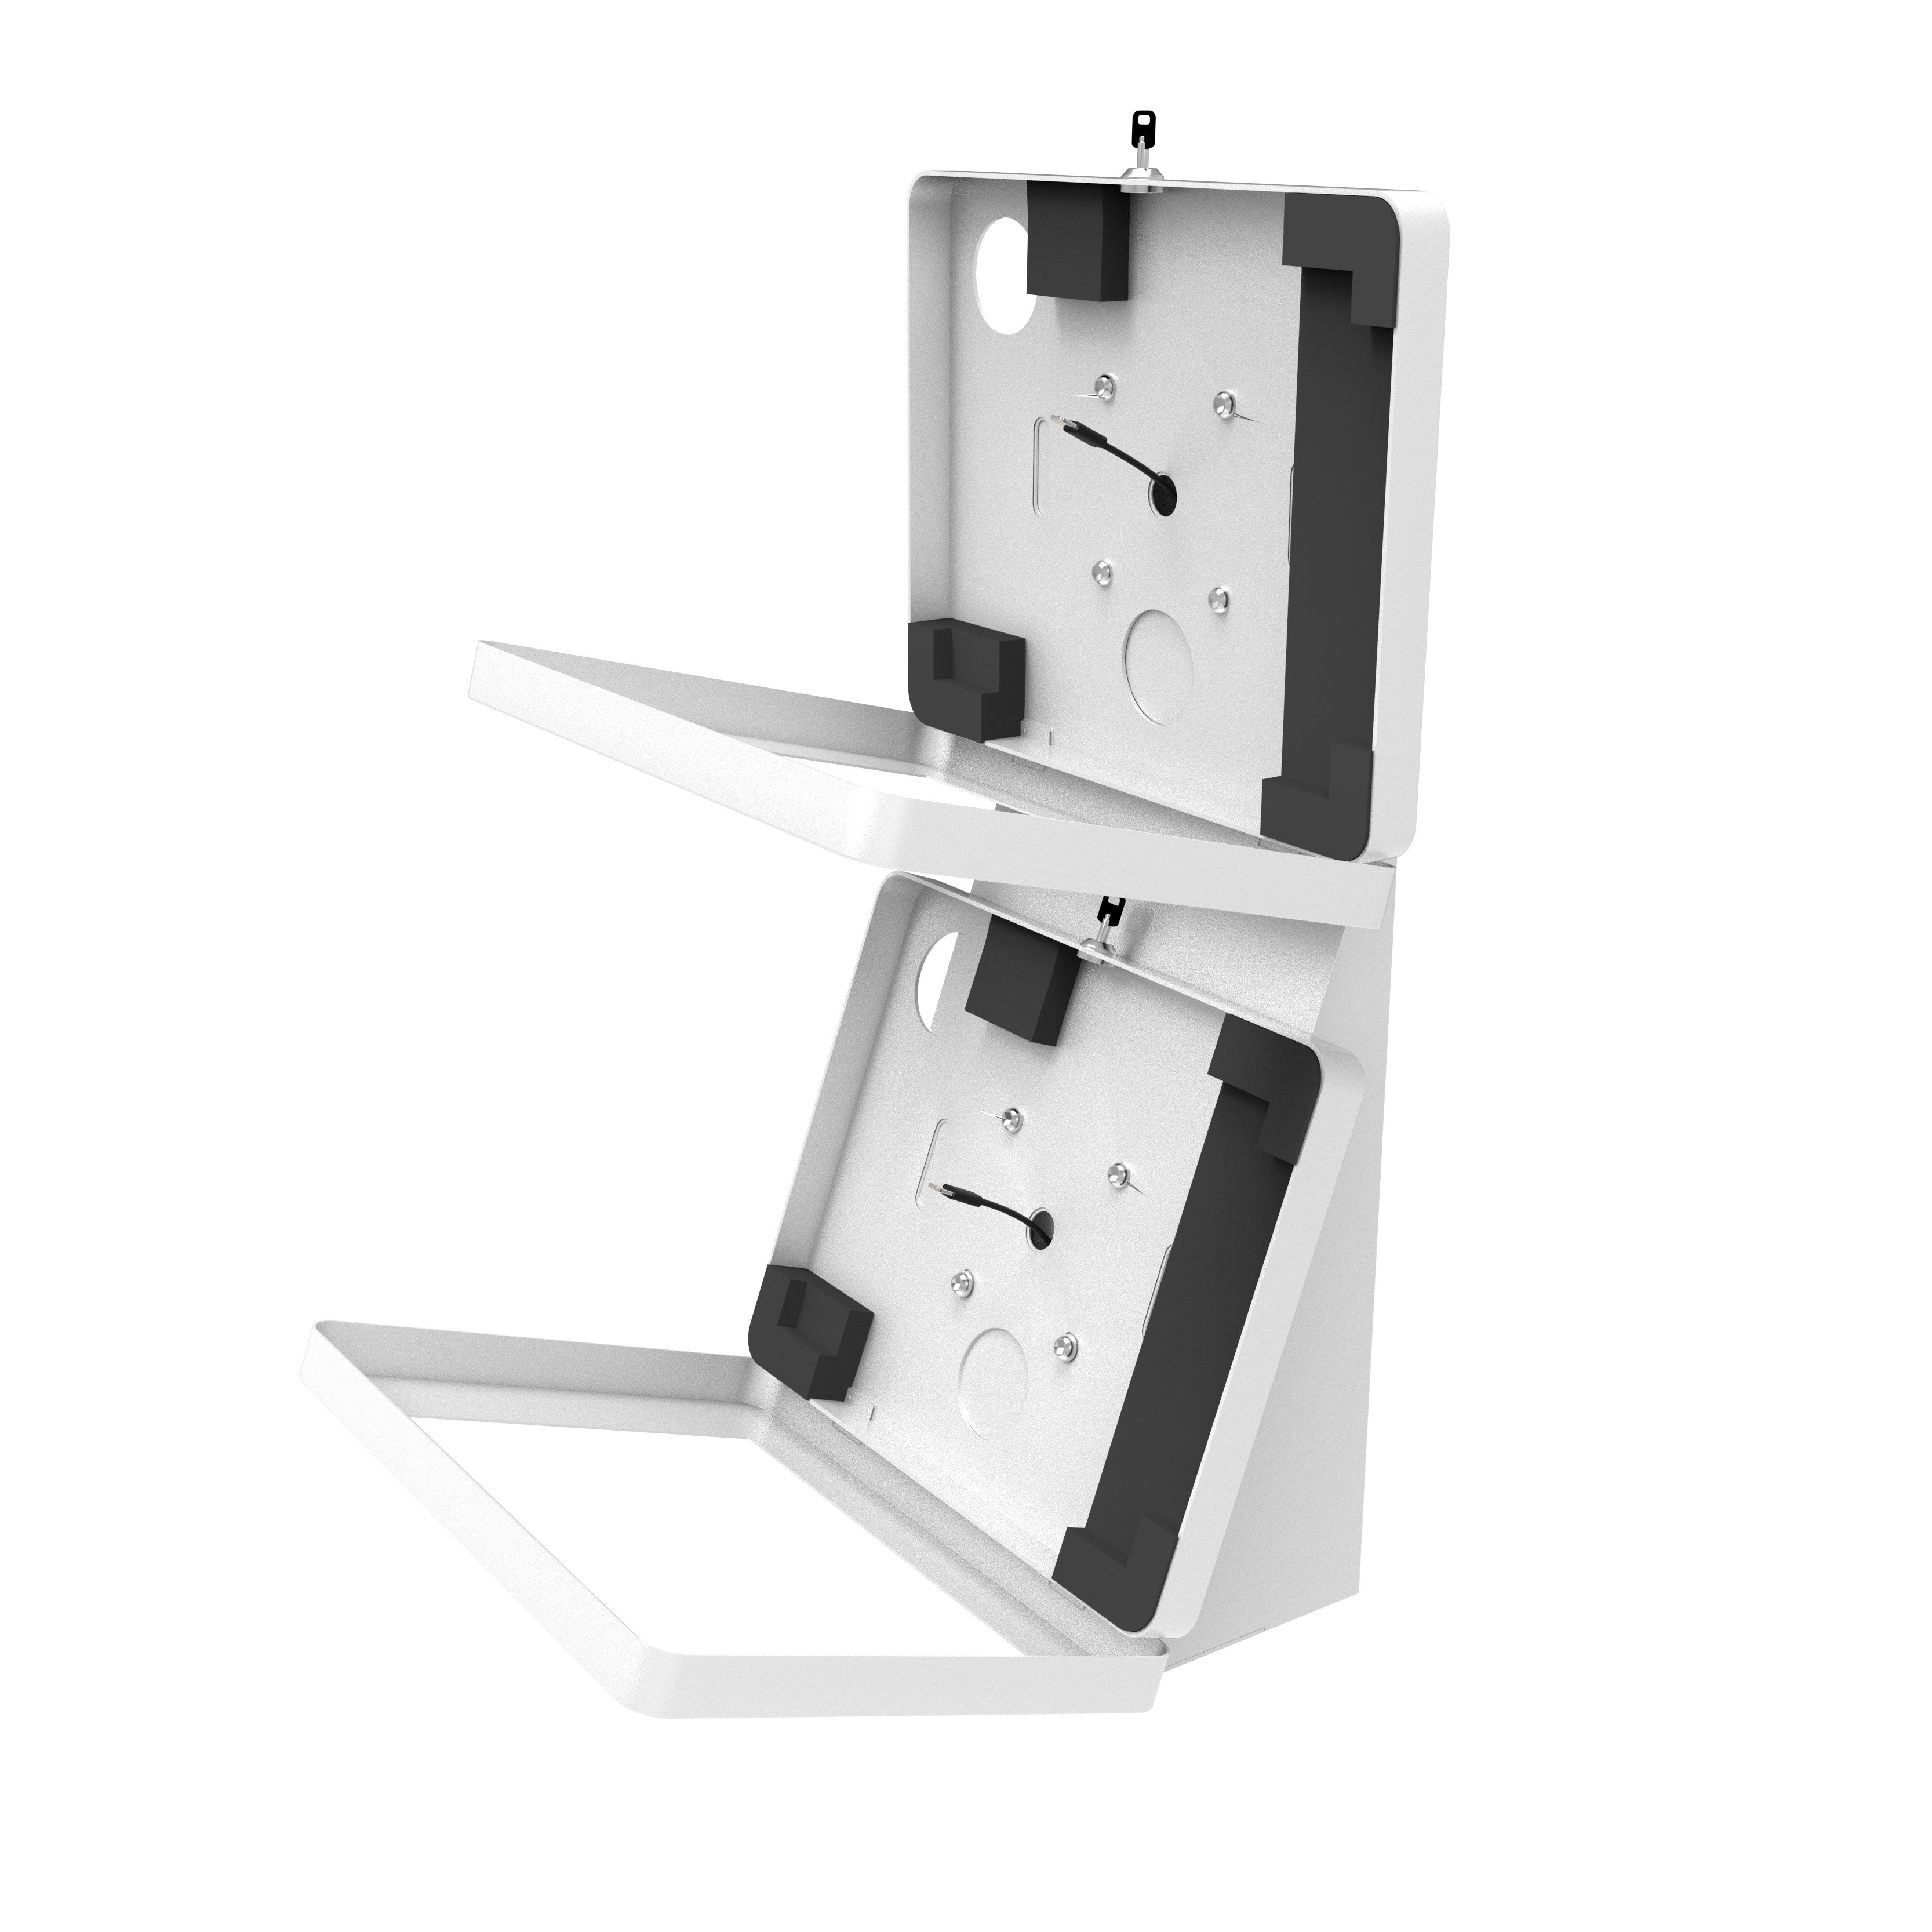 Dual Universal Security Enclosure Desk Mount w/ Storage Compartment (Black)